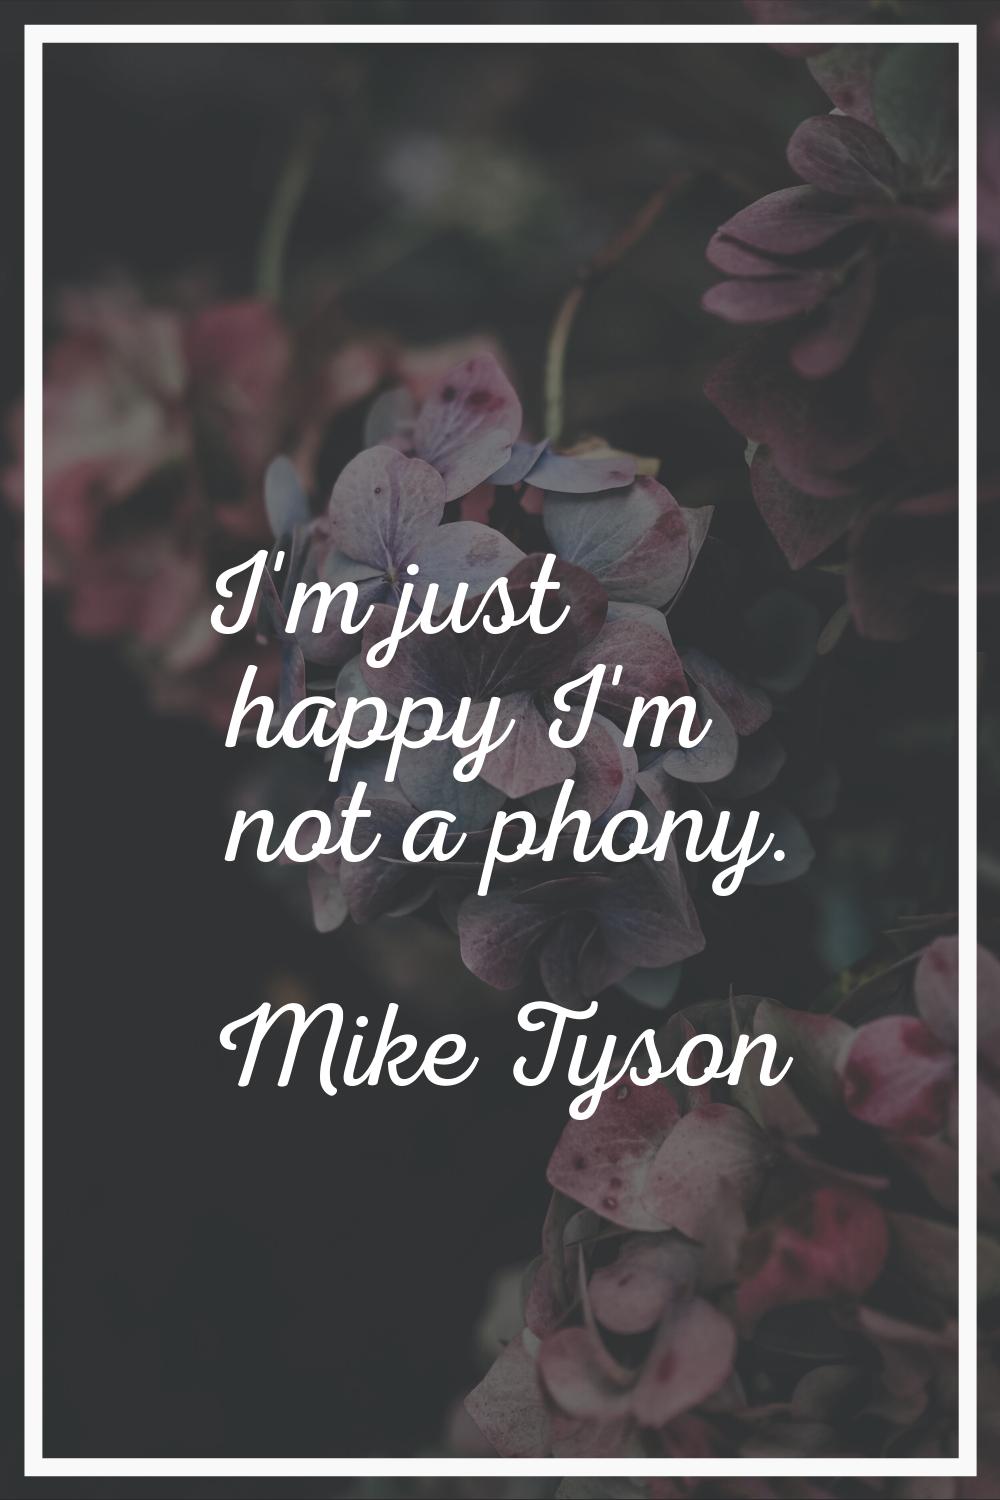 I'm just happy I'm not a phony.